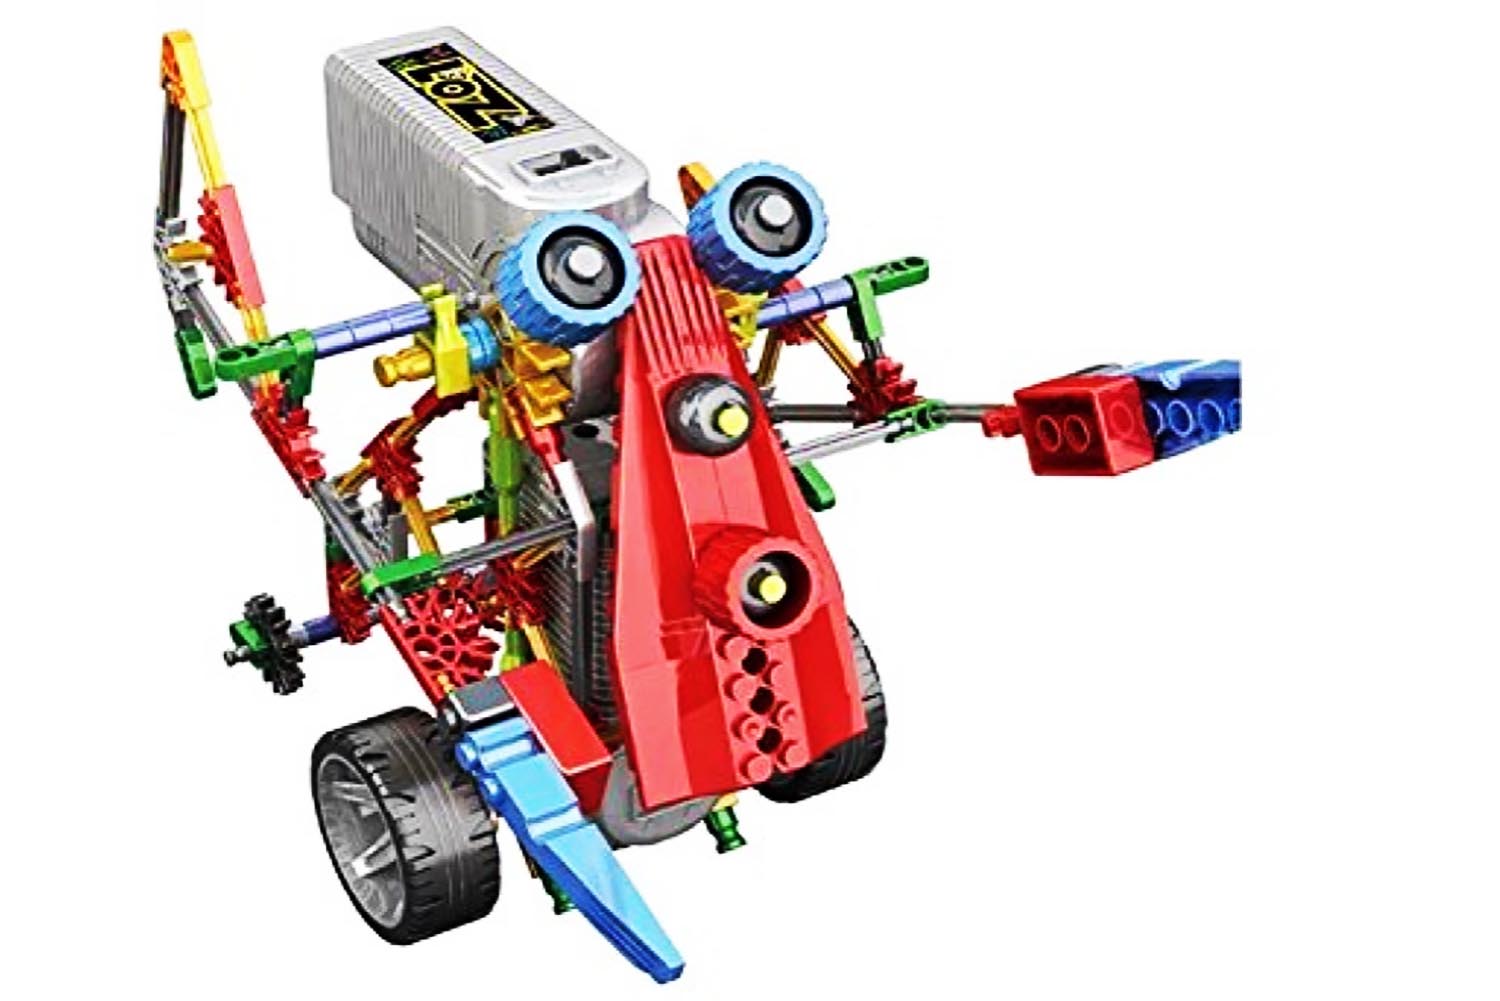 10. The Jungle Dragon Toy Combines Robotics and Imagination Clapway